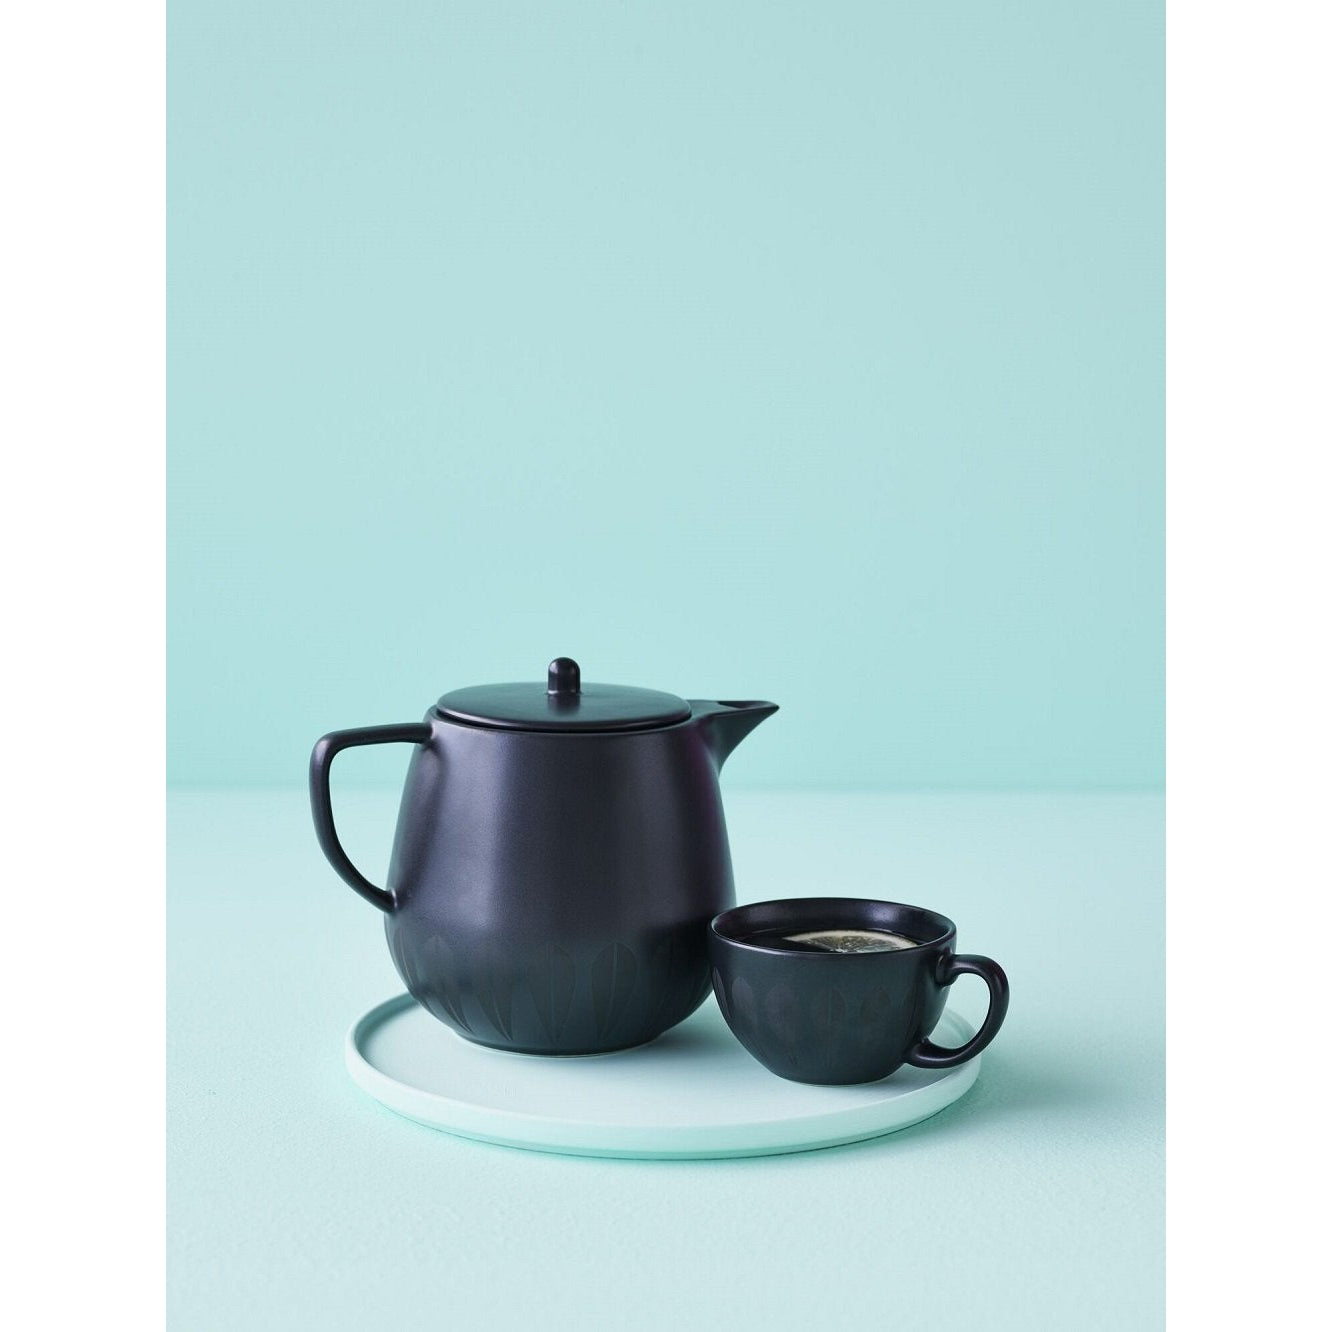 Lucie Kaas Arne Clausen Collection Teapot, Mint Green